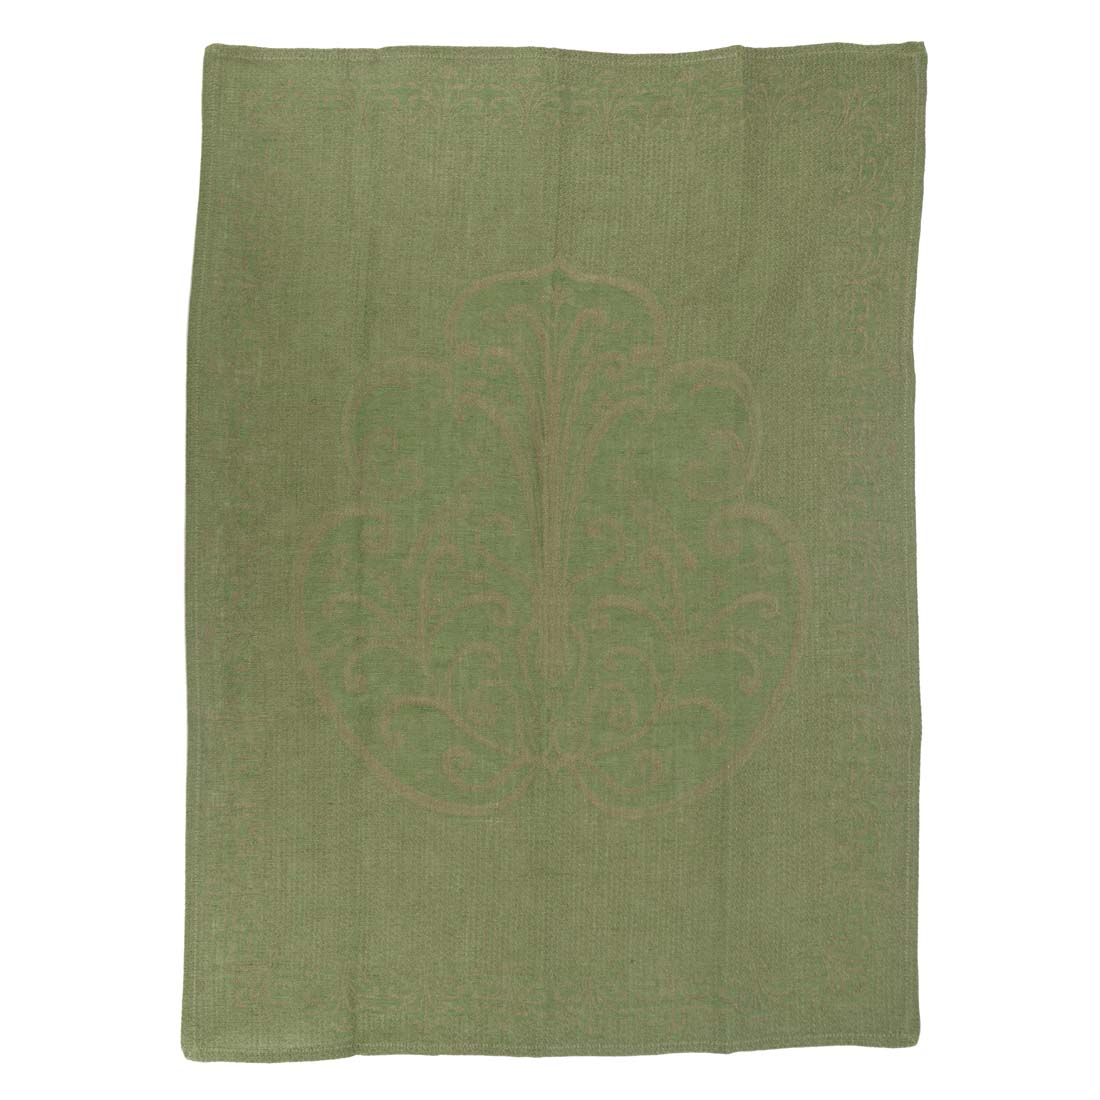 Green Italian Linen Tea Towel